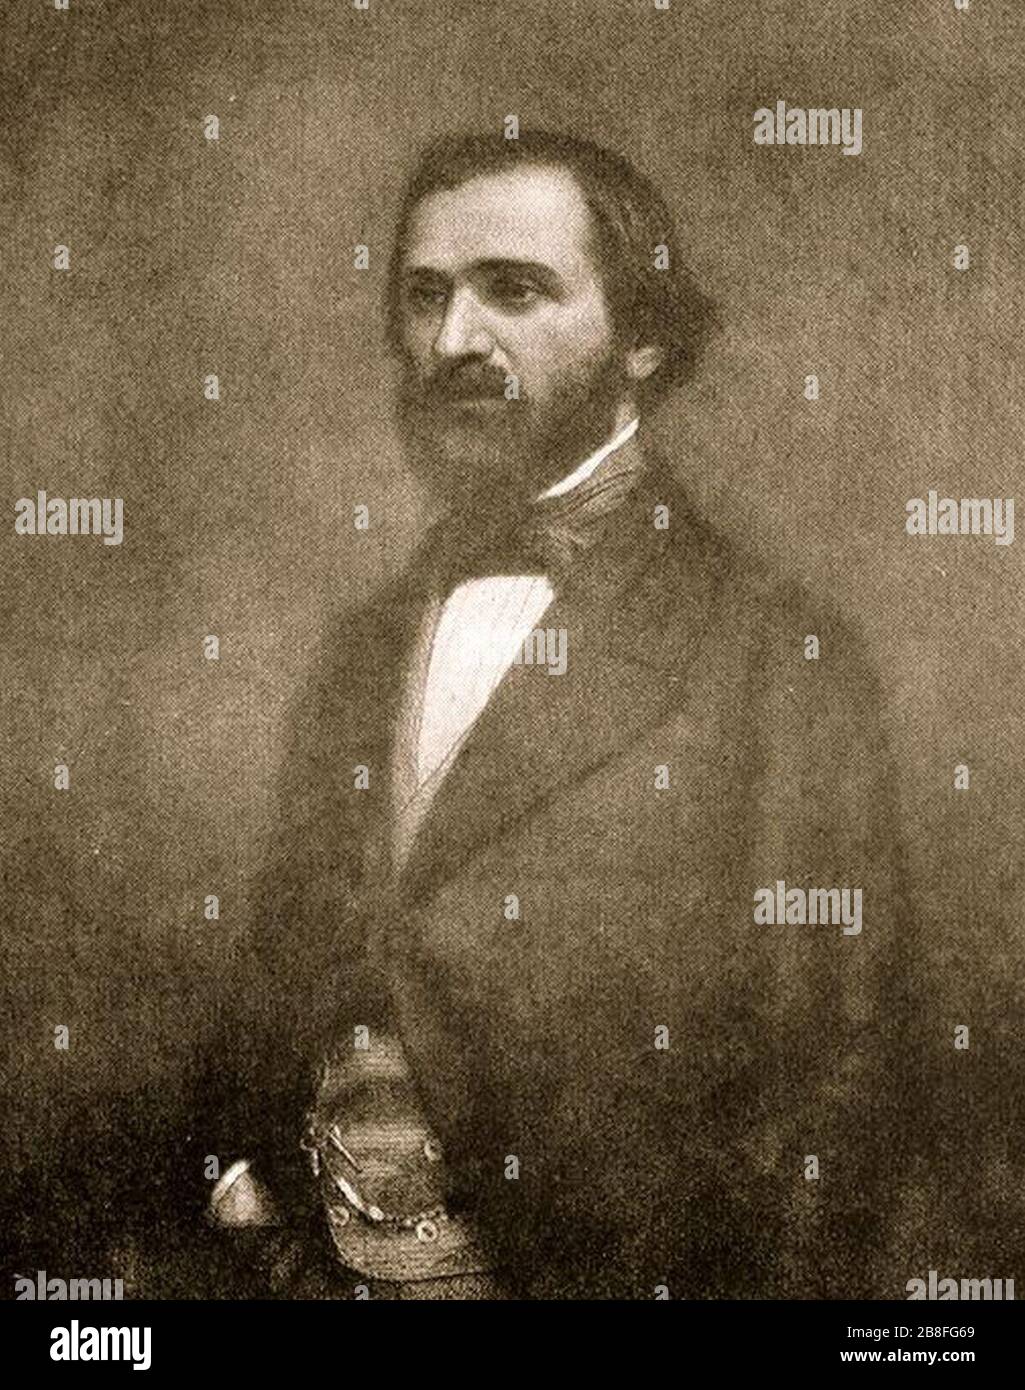 Giuseppe Verdi portrait. Stock Photo